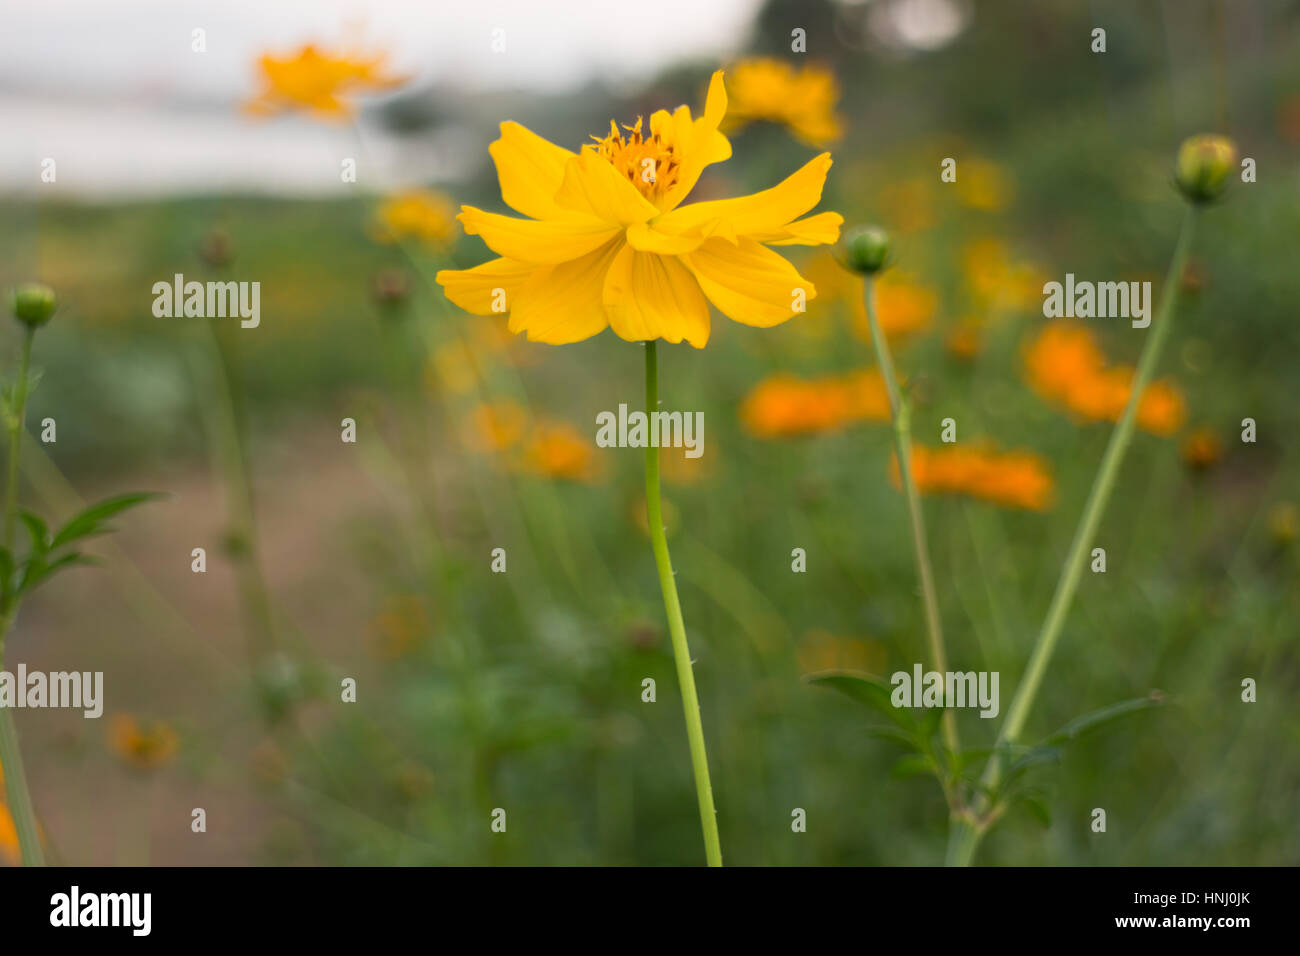 Marigold flower field in rural garden, stock photo Stock Photo